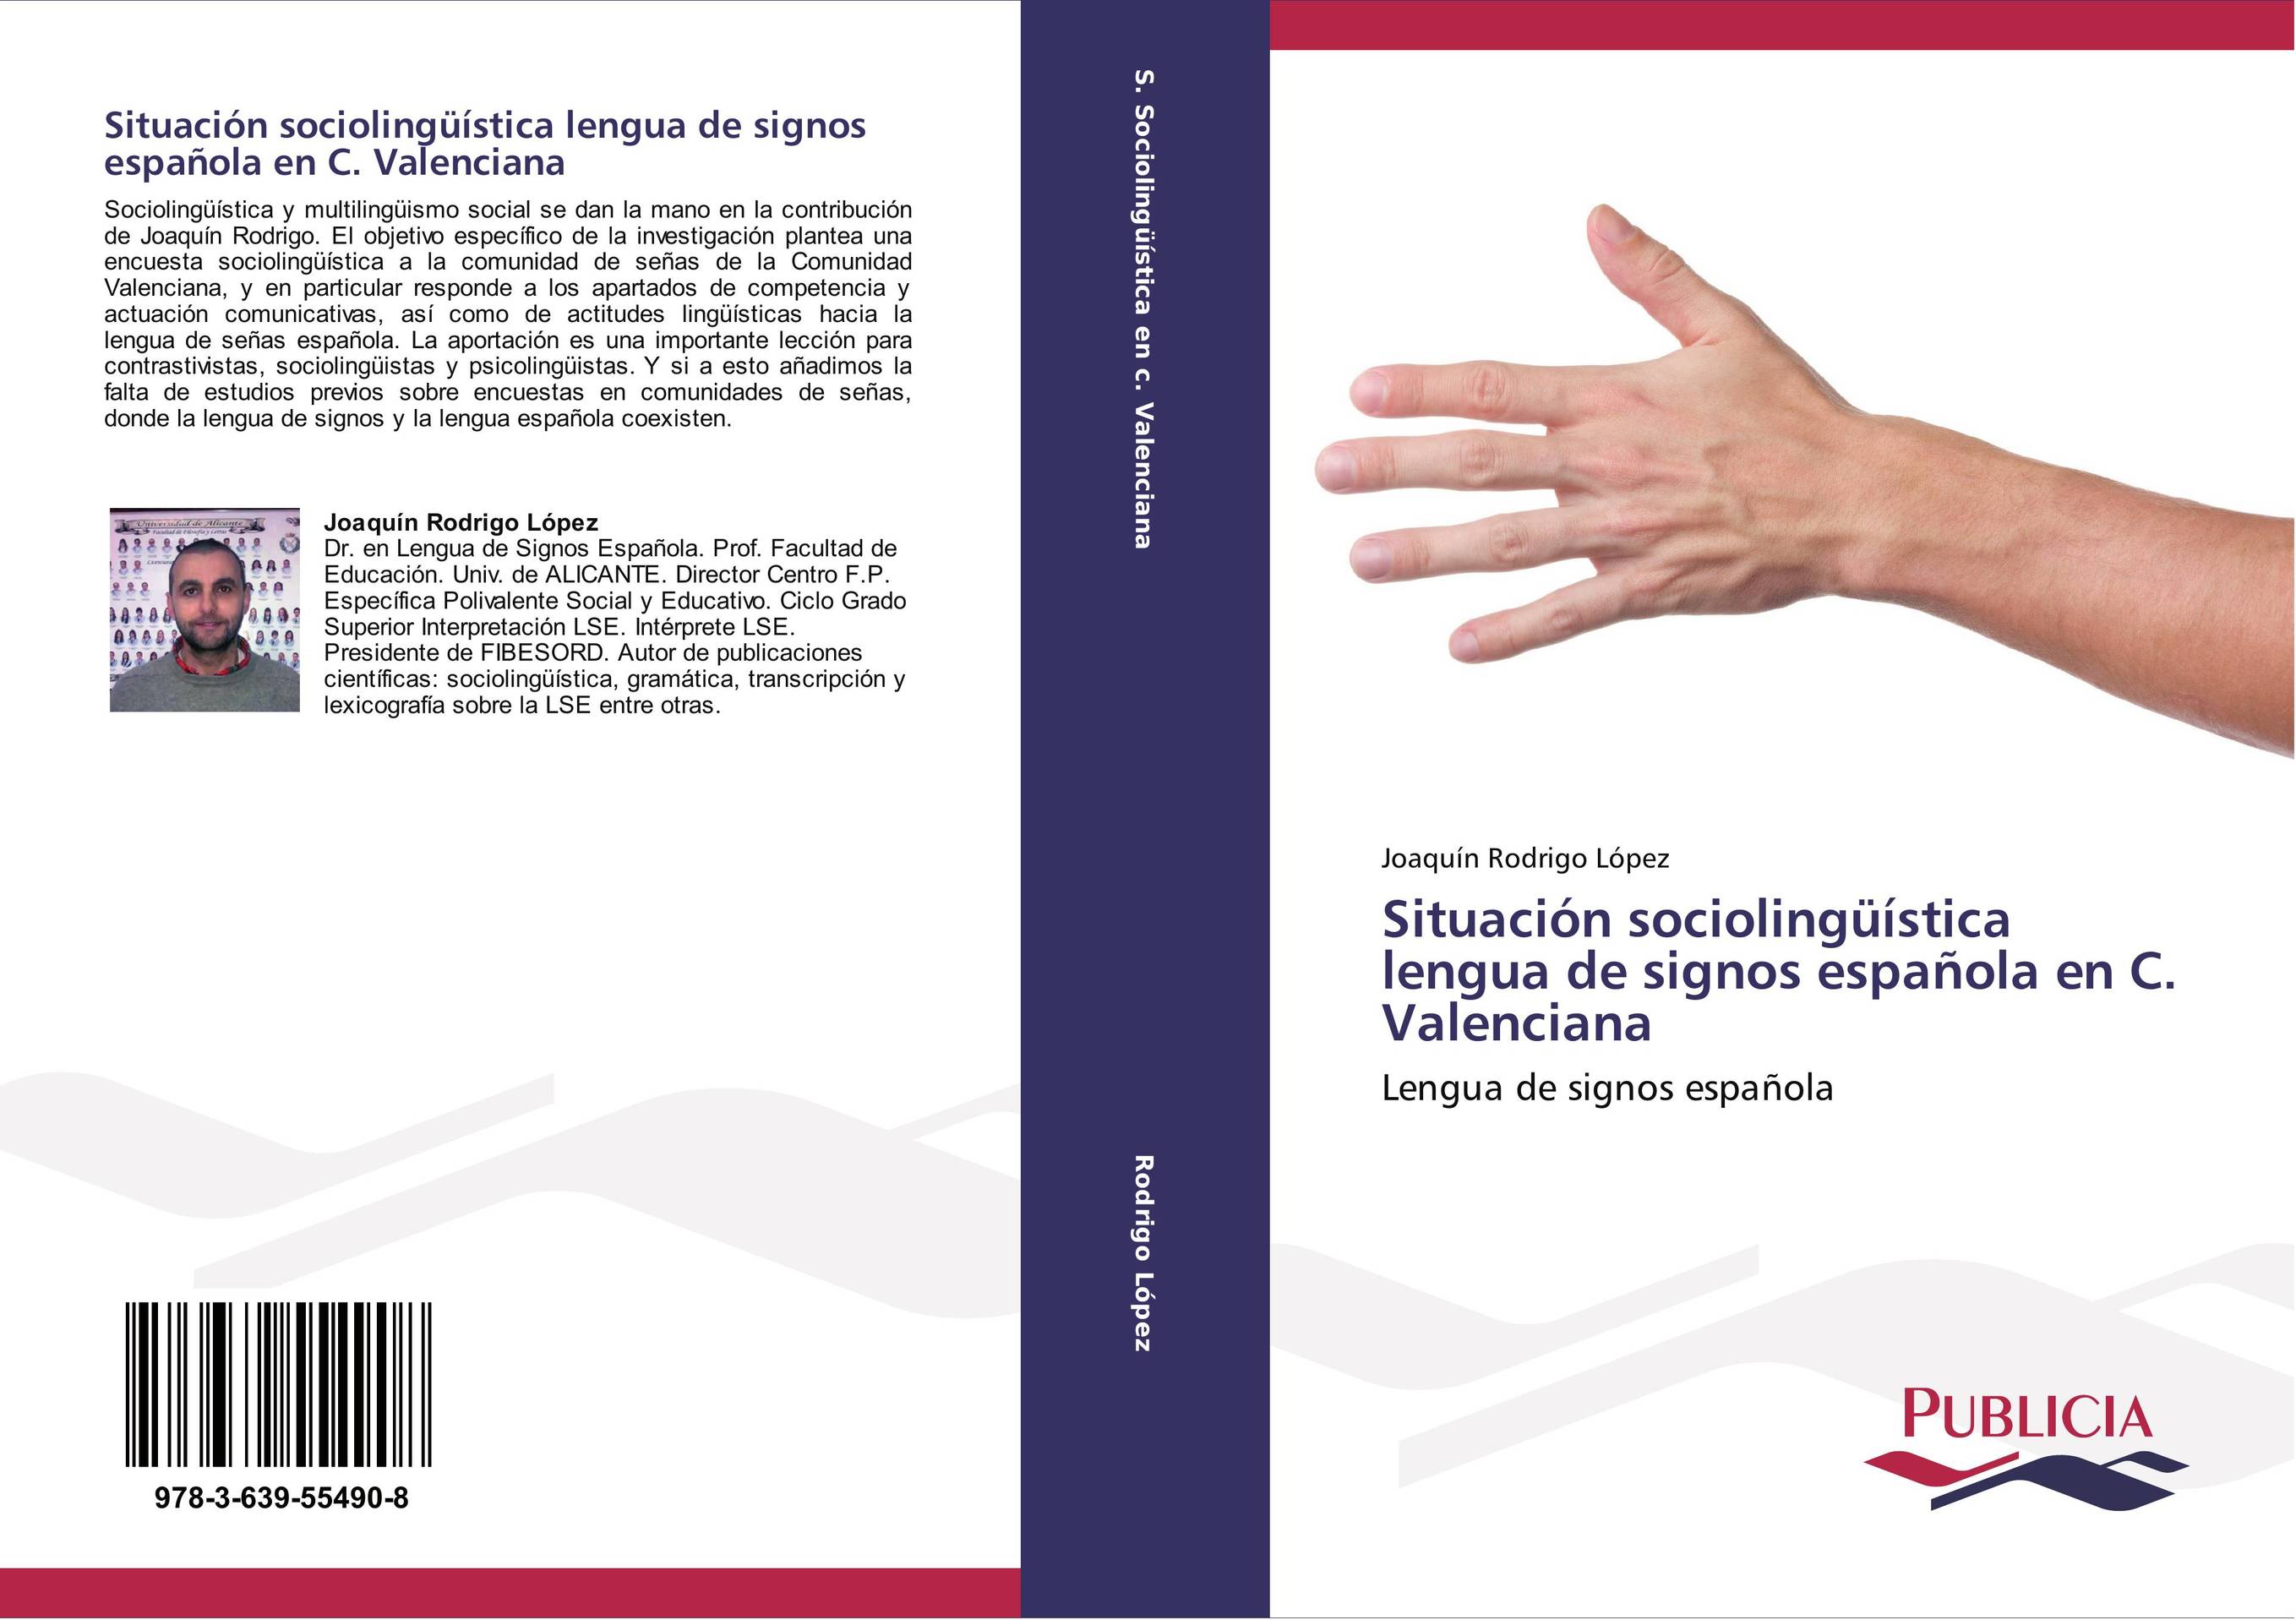 Situación sociolingüística lengua de signos española en C. Valenciana